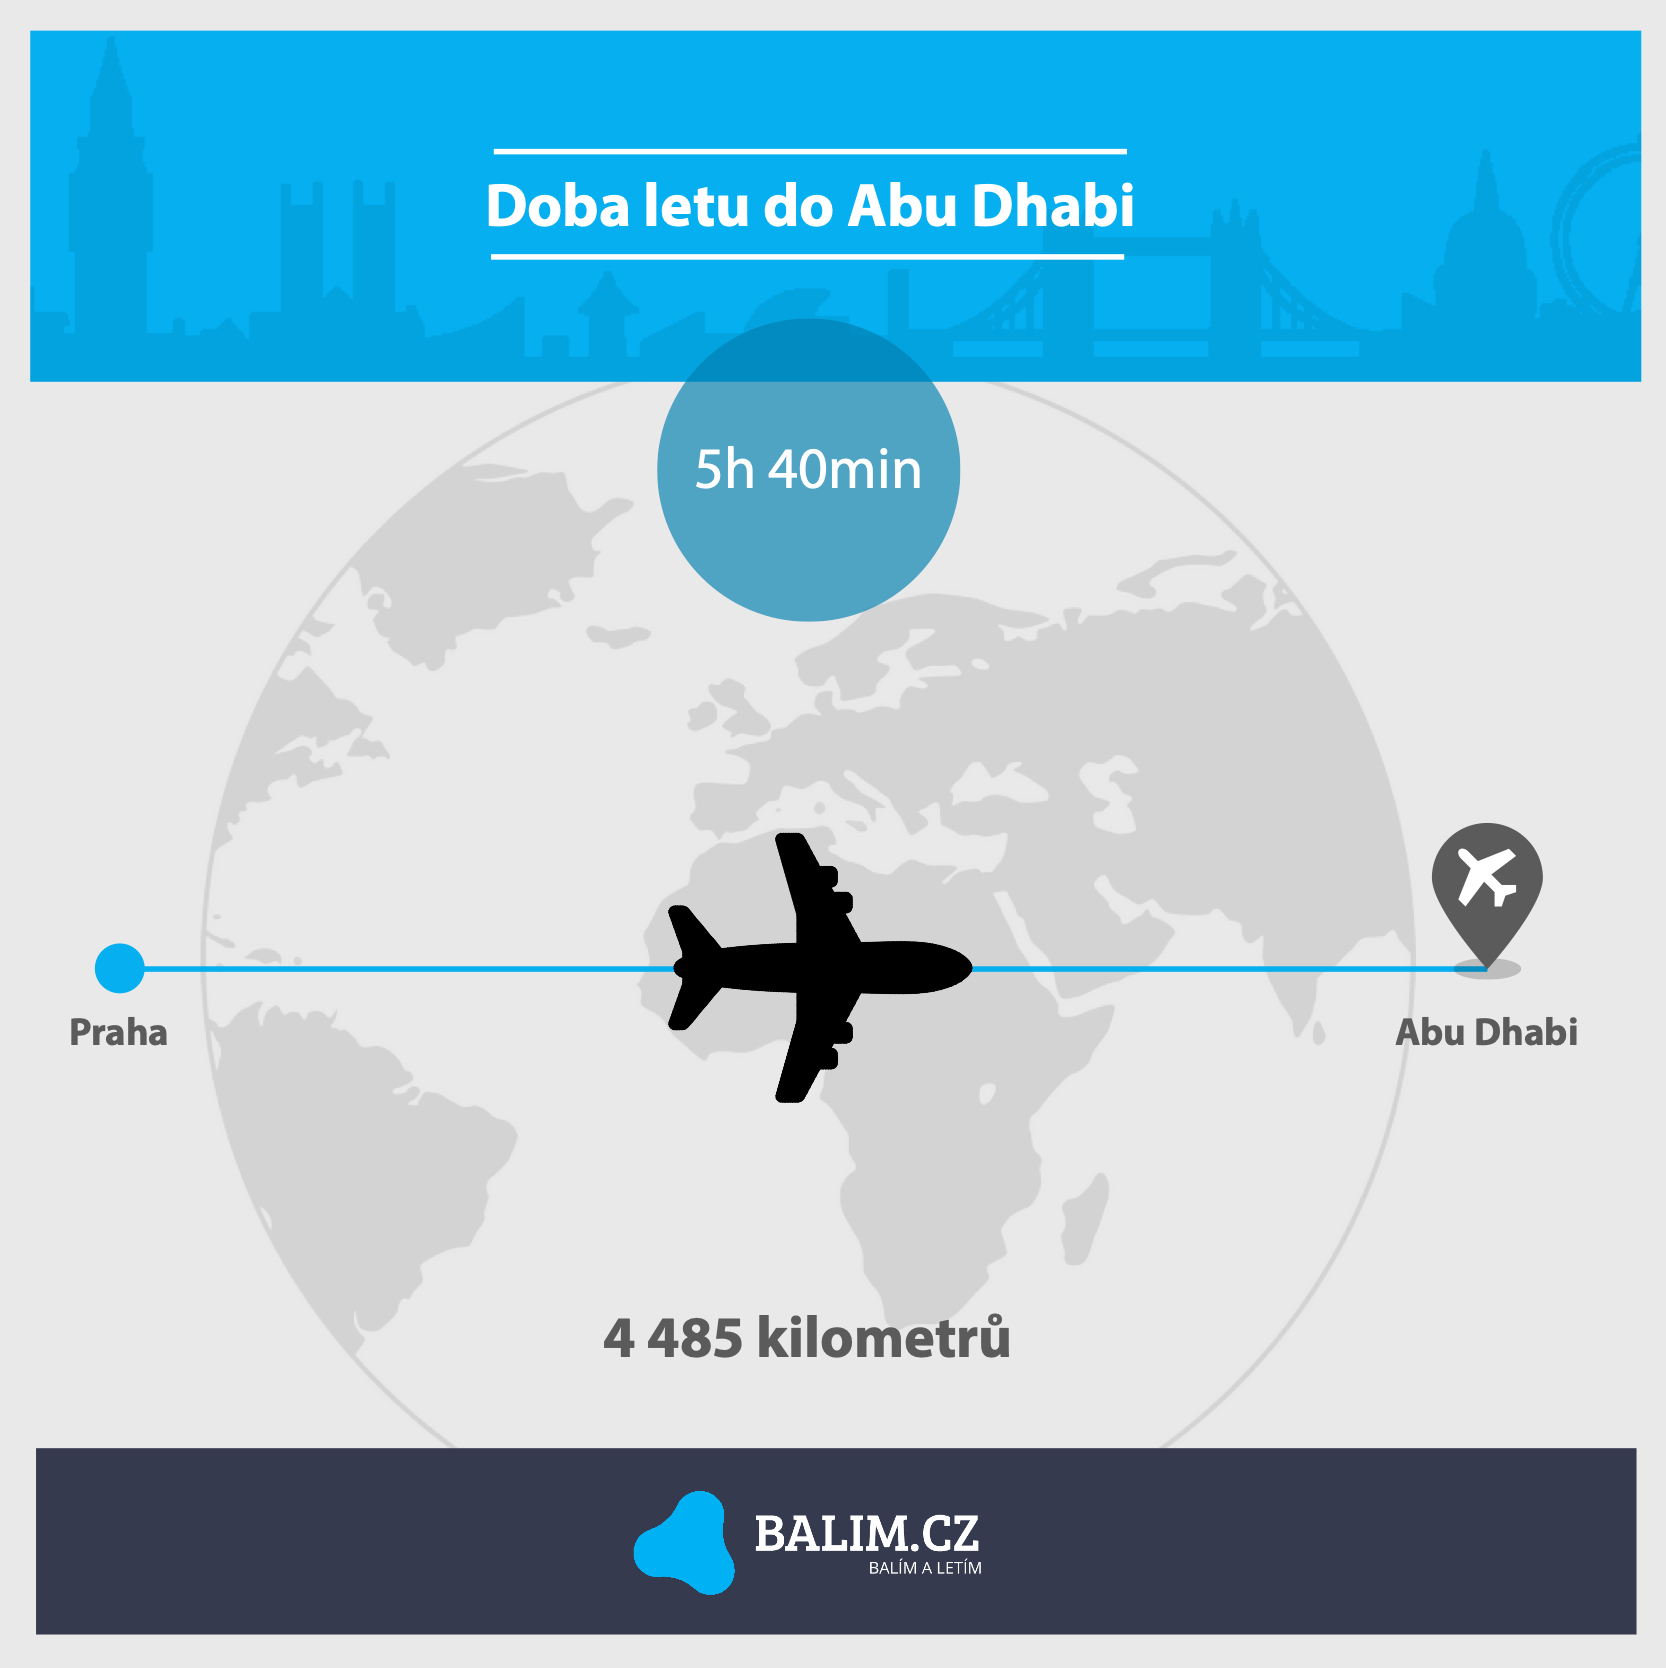 Jak dlouho trvá let do Abu Dhabi?